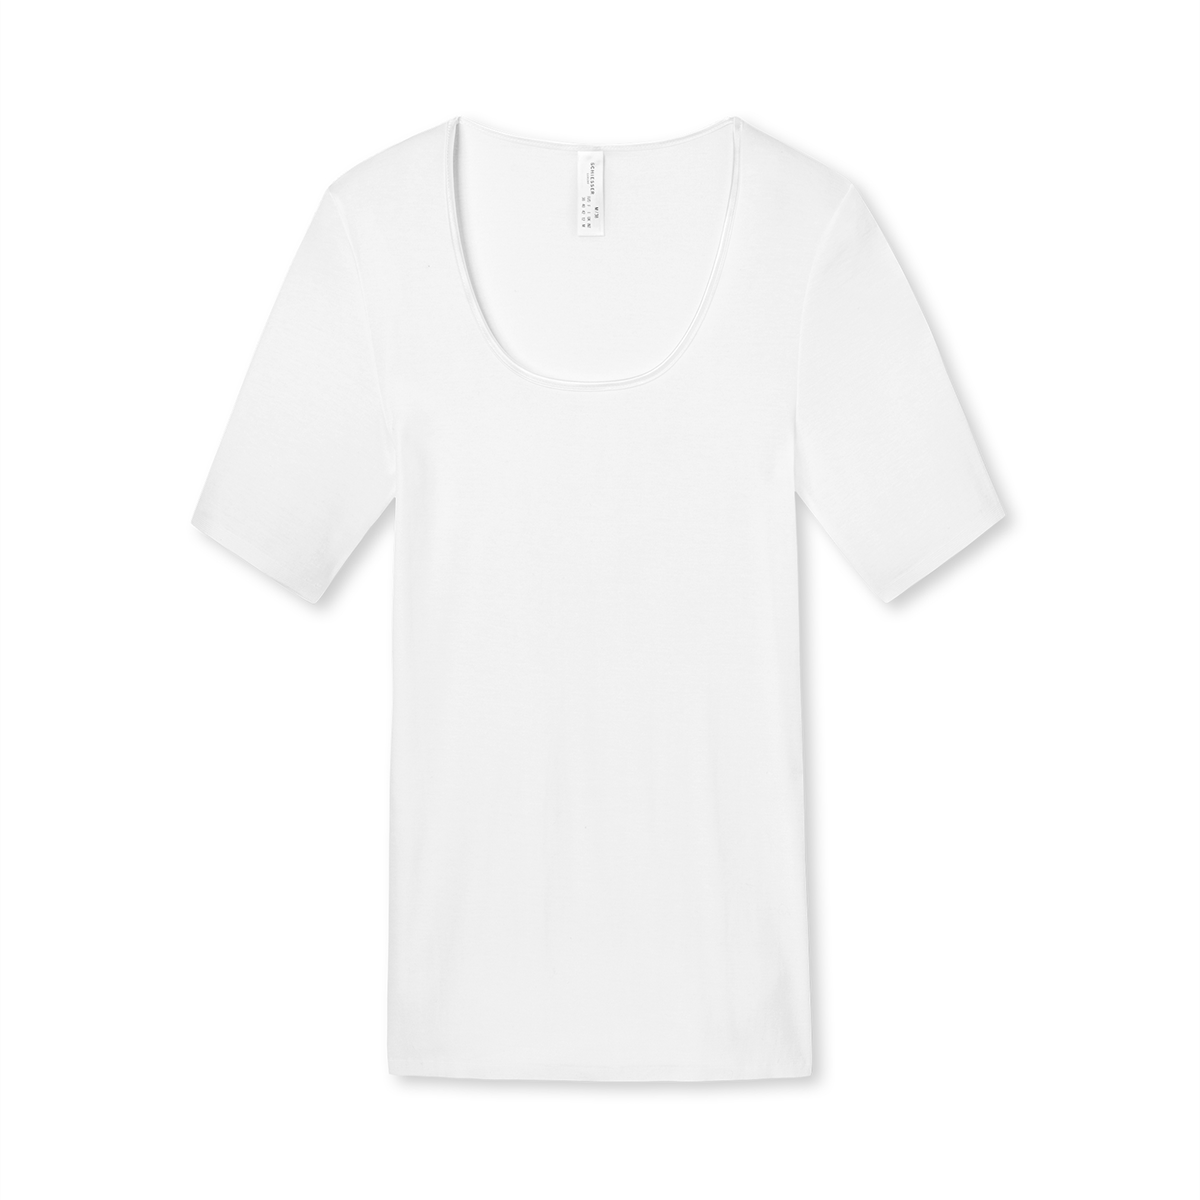 Se Schiesser T-shirt, Farve: Hvid, Størrelse: 48, Dame hos Netlingeri.dk